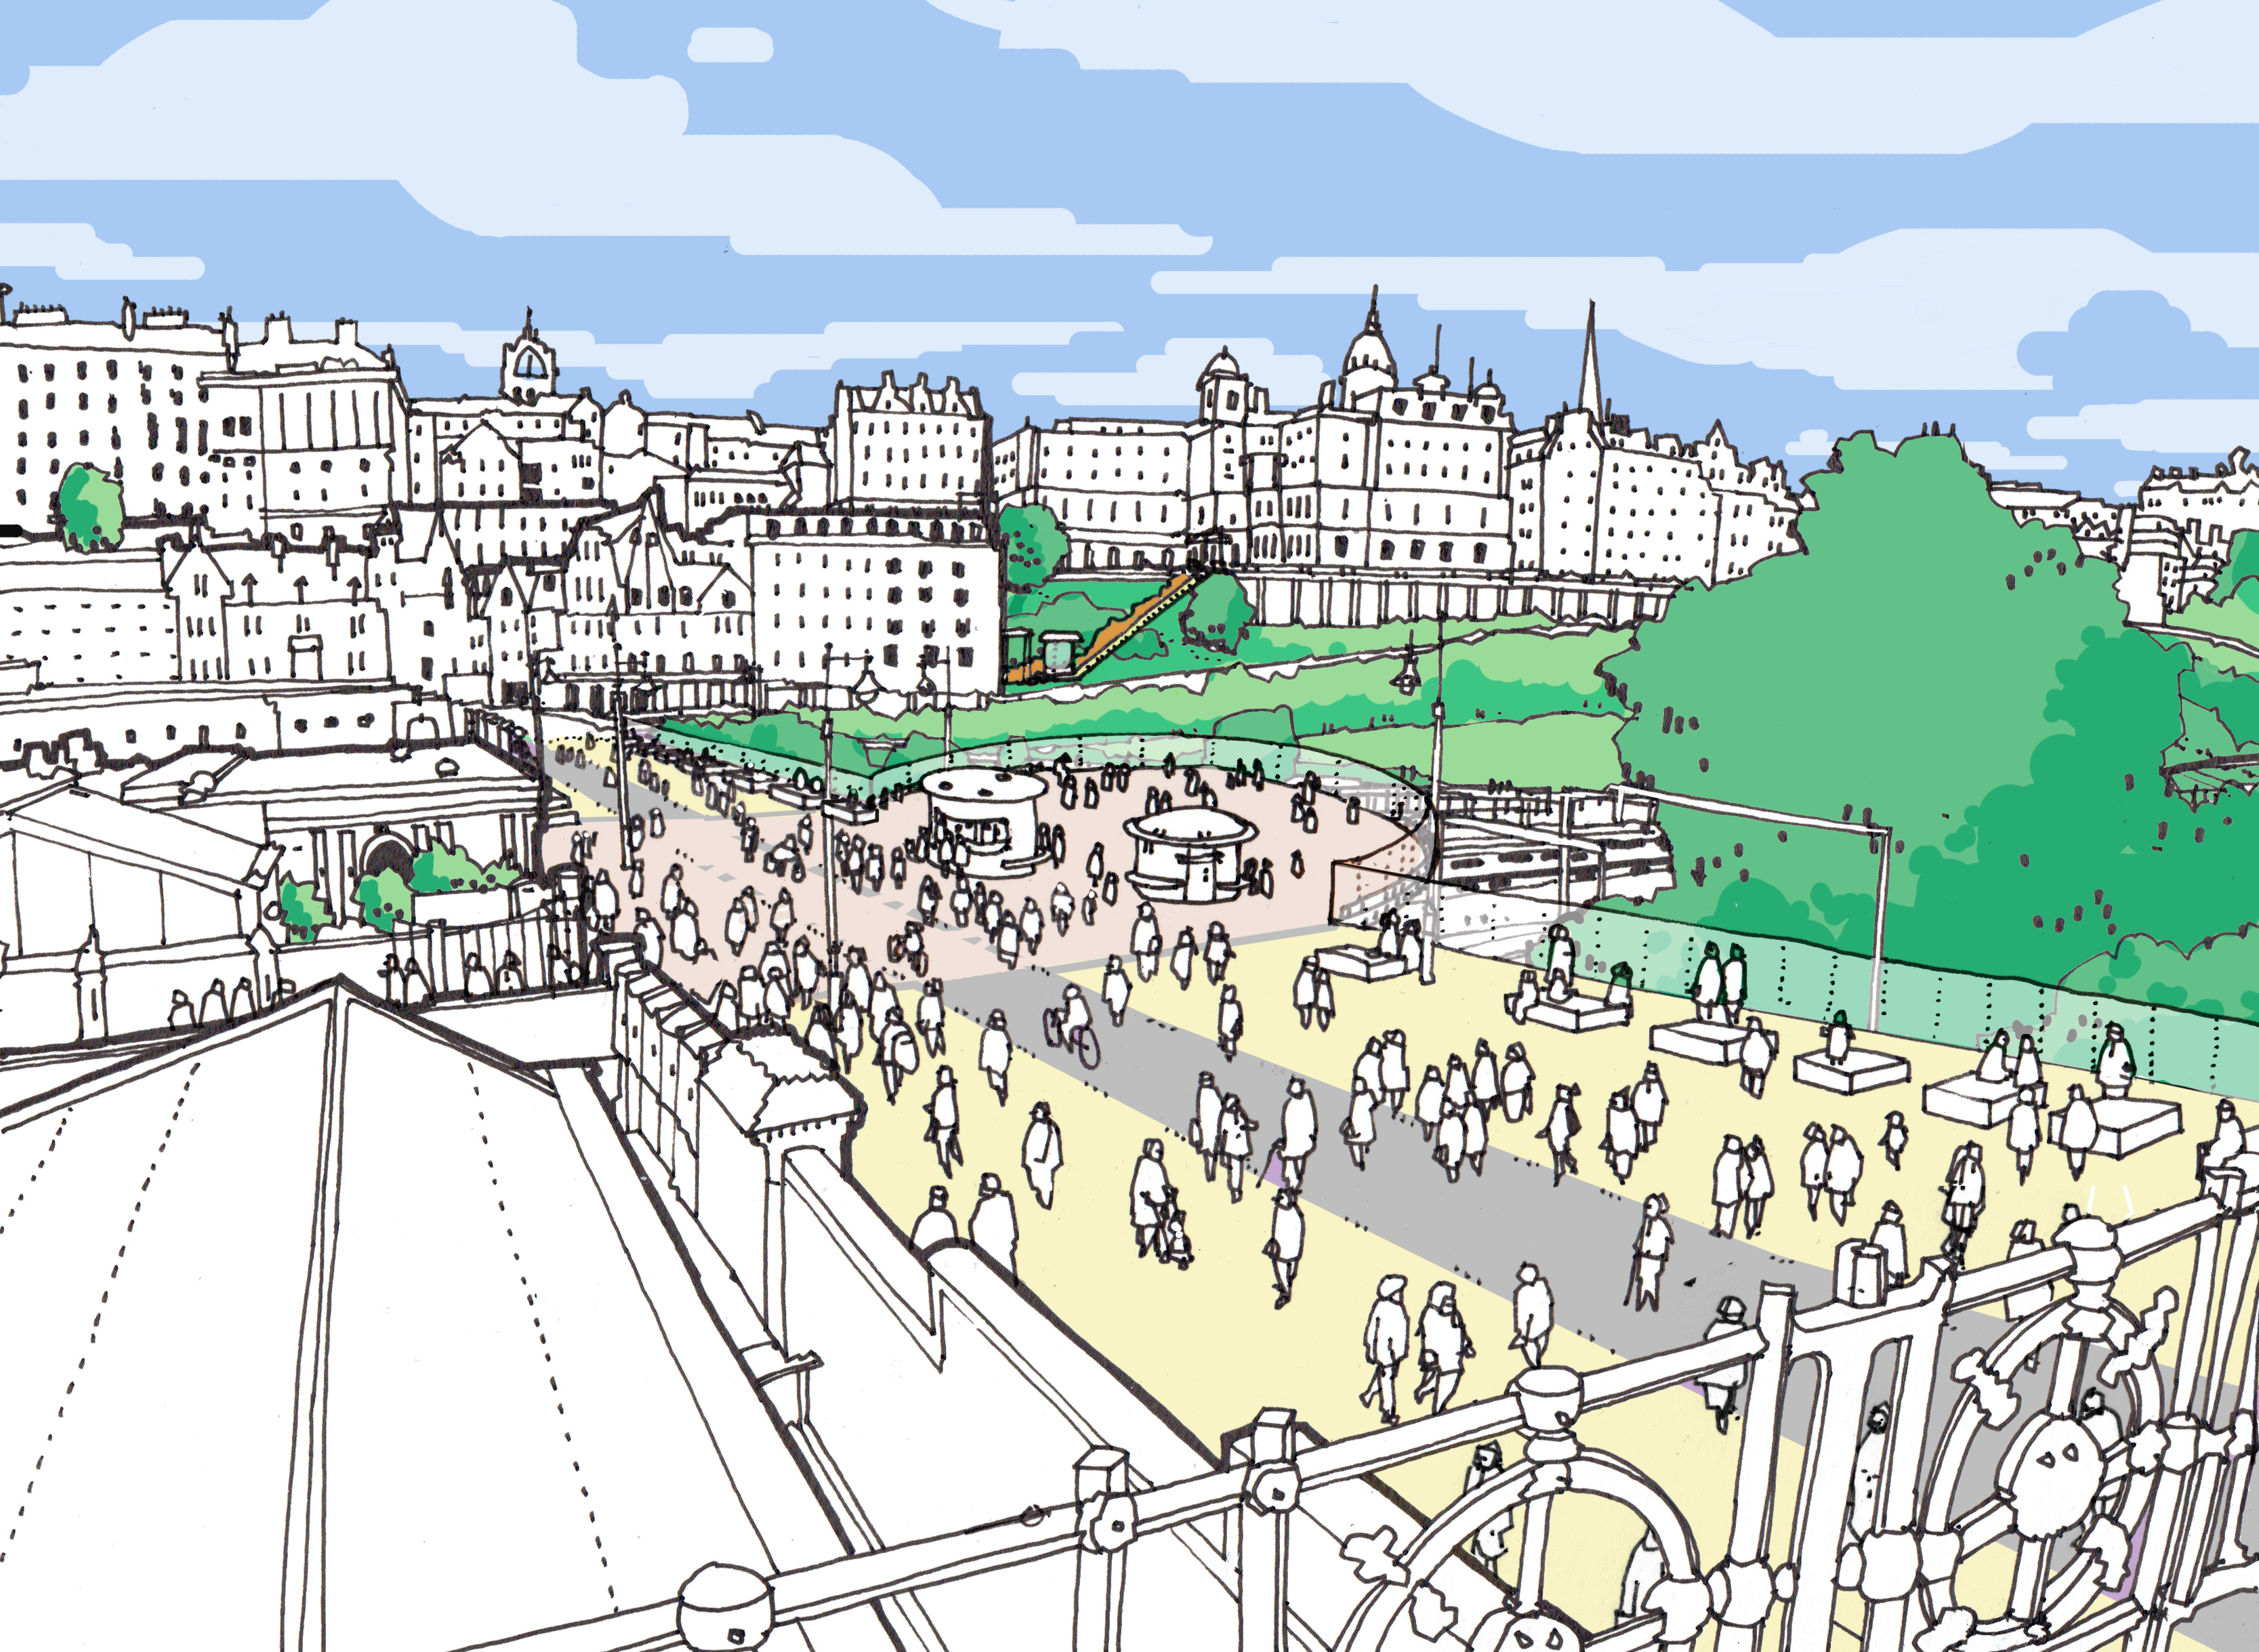 Proposals for Edinburgh’s transport transformation unveiled